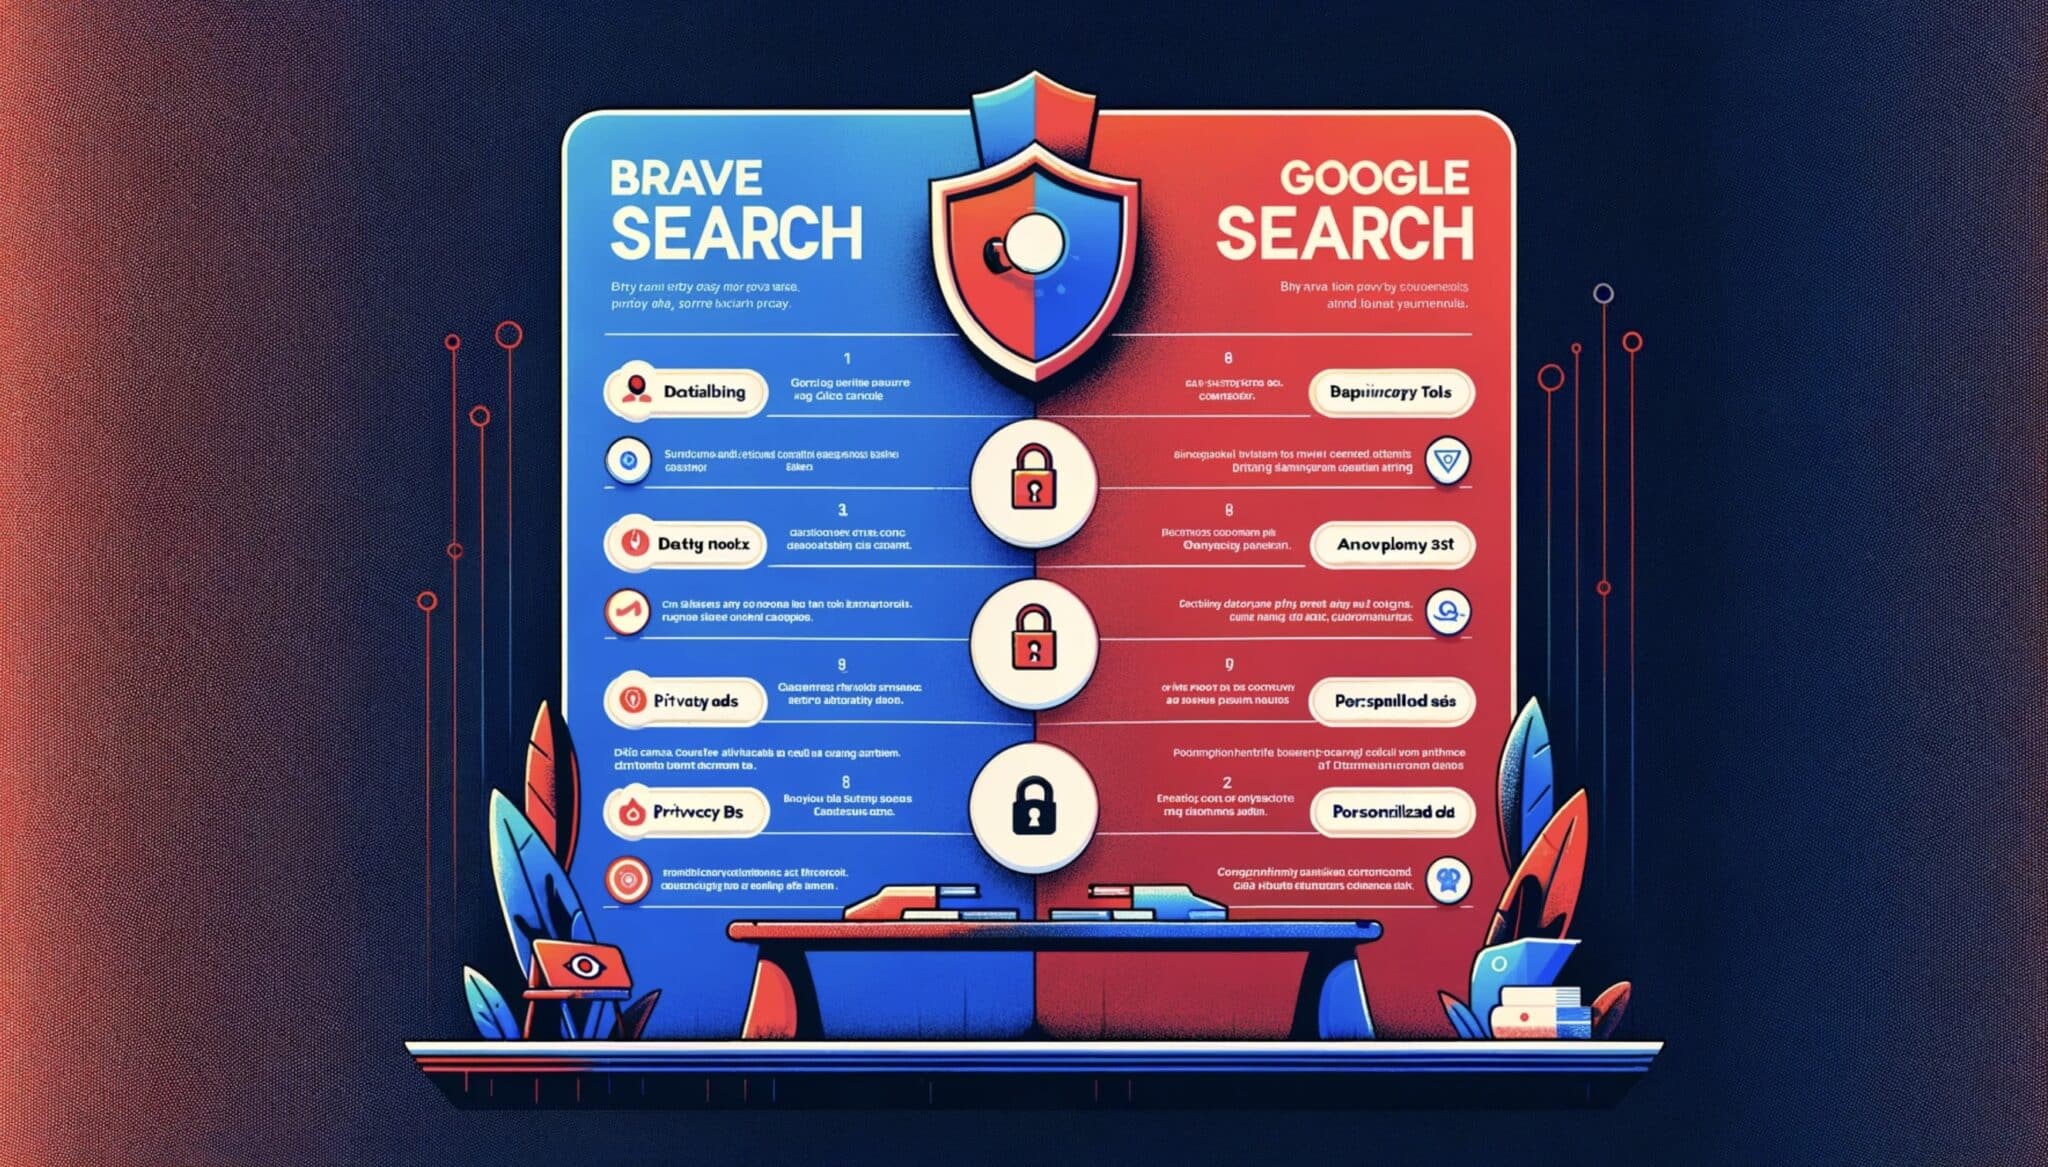 Brave Search 在保护个人数据方面与 Google 相比如何？